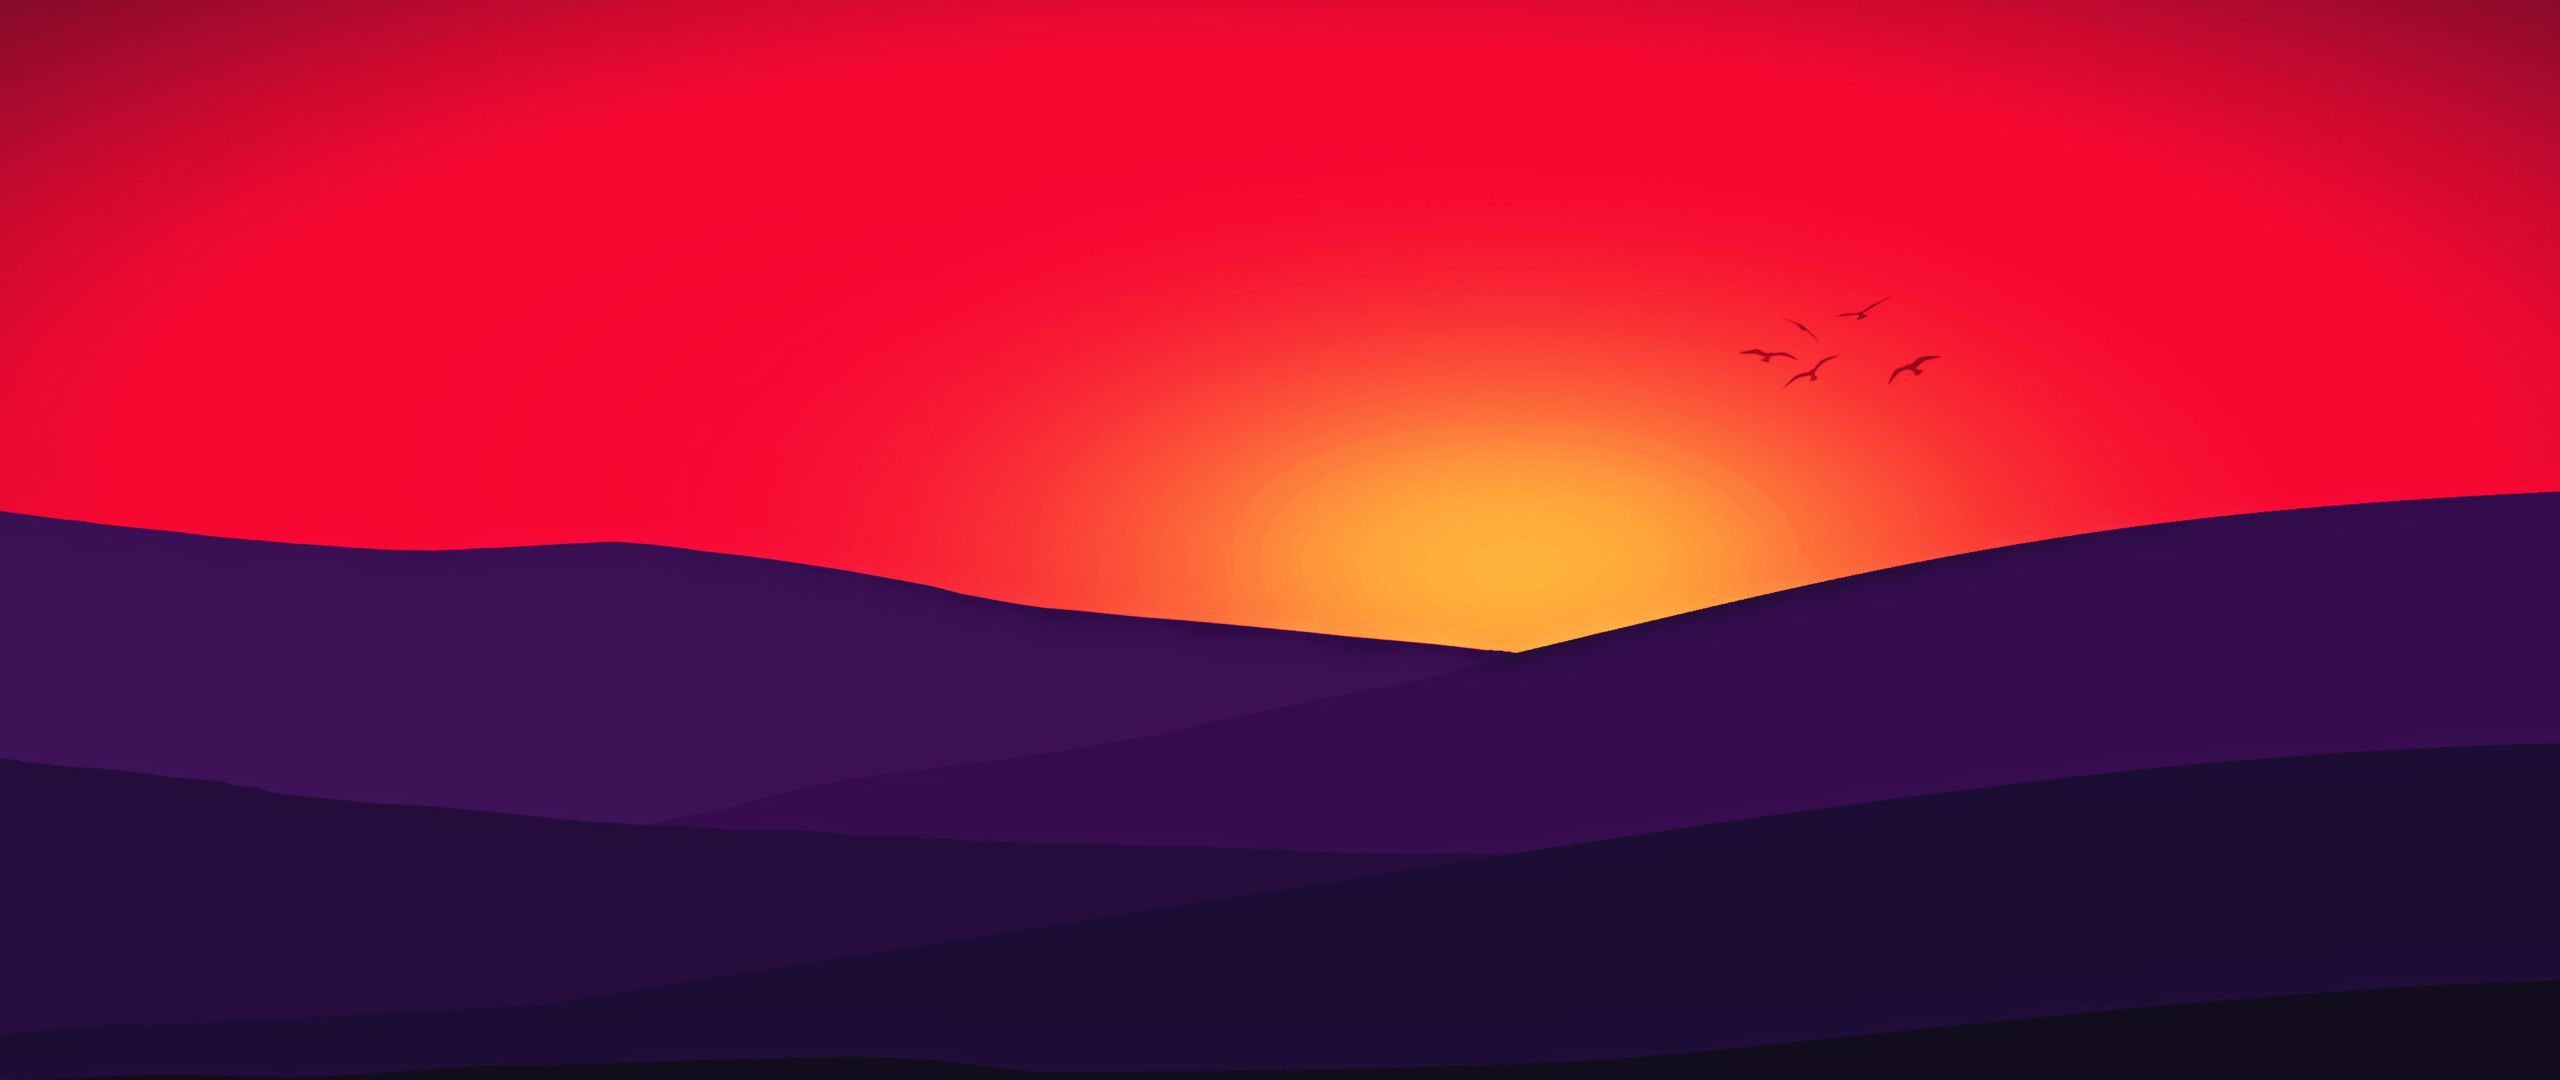 Minimal Sunset, Purple Mountains And Birds 2560x1080